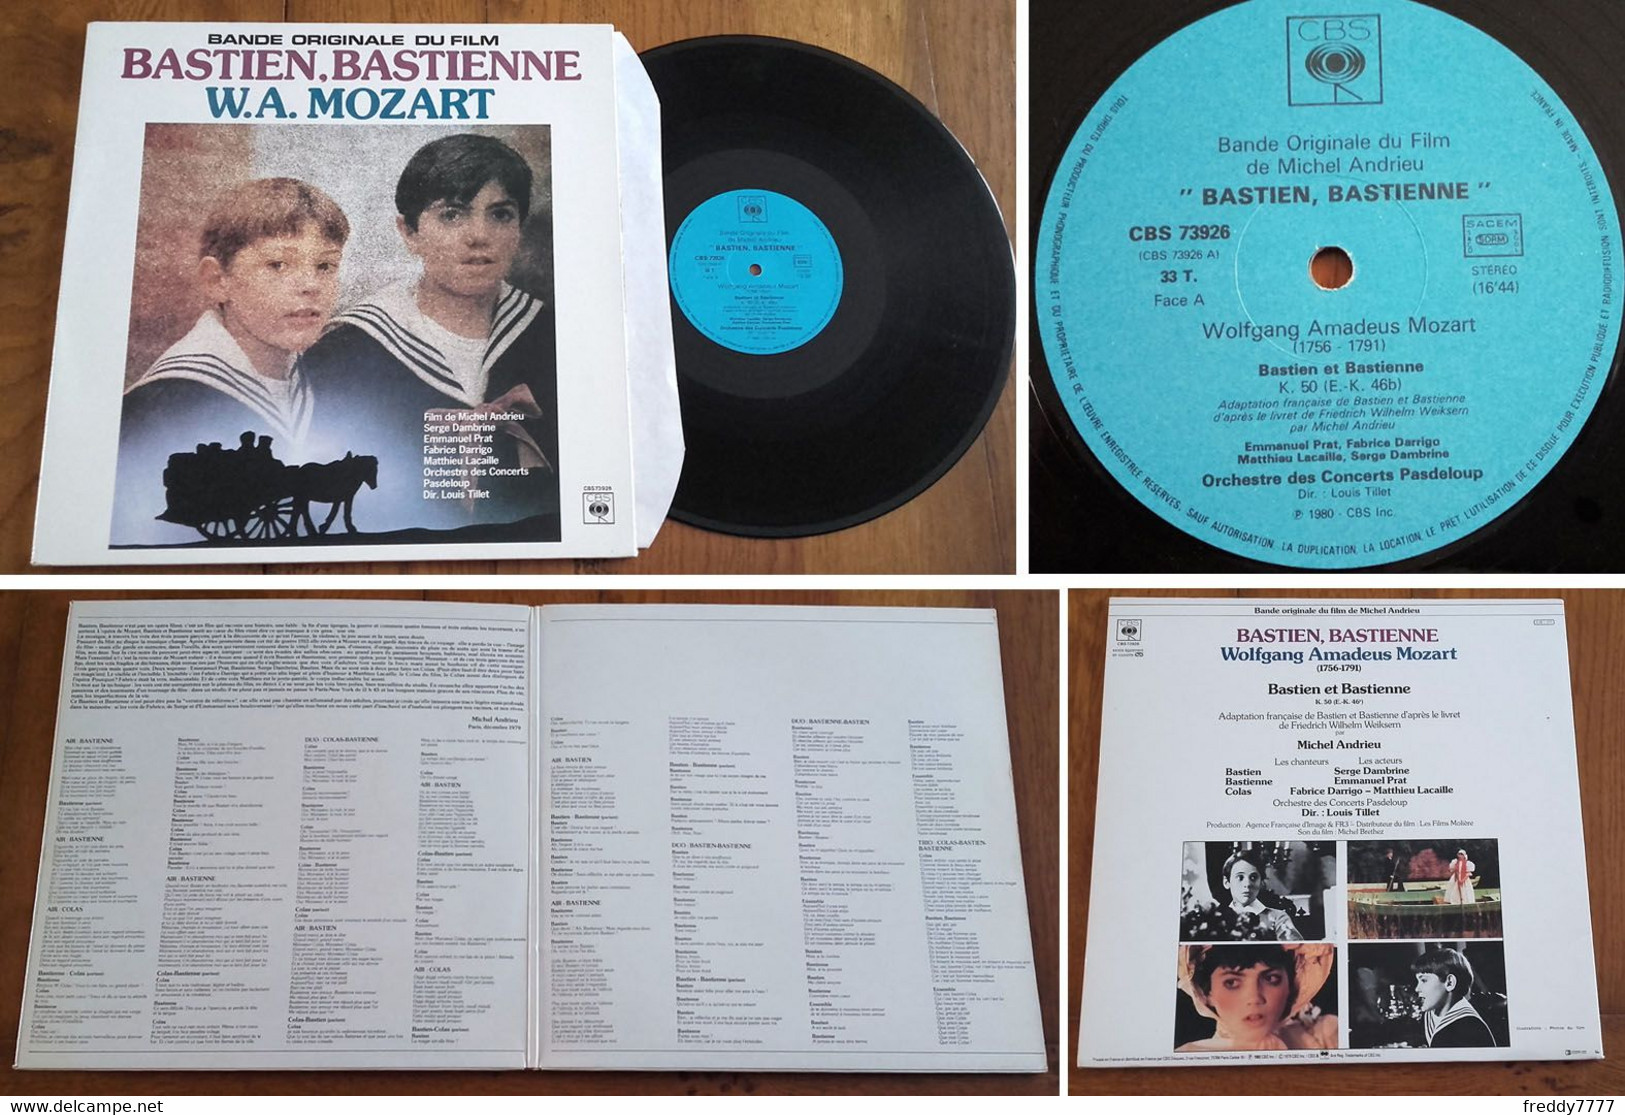 RARE French LP 33t RPM (12") BOF OST "BASTIEN, BASTIENNE" (gatefold P/s, 1985) - Soundtracks, Film Music